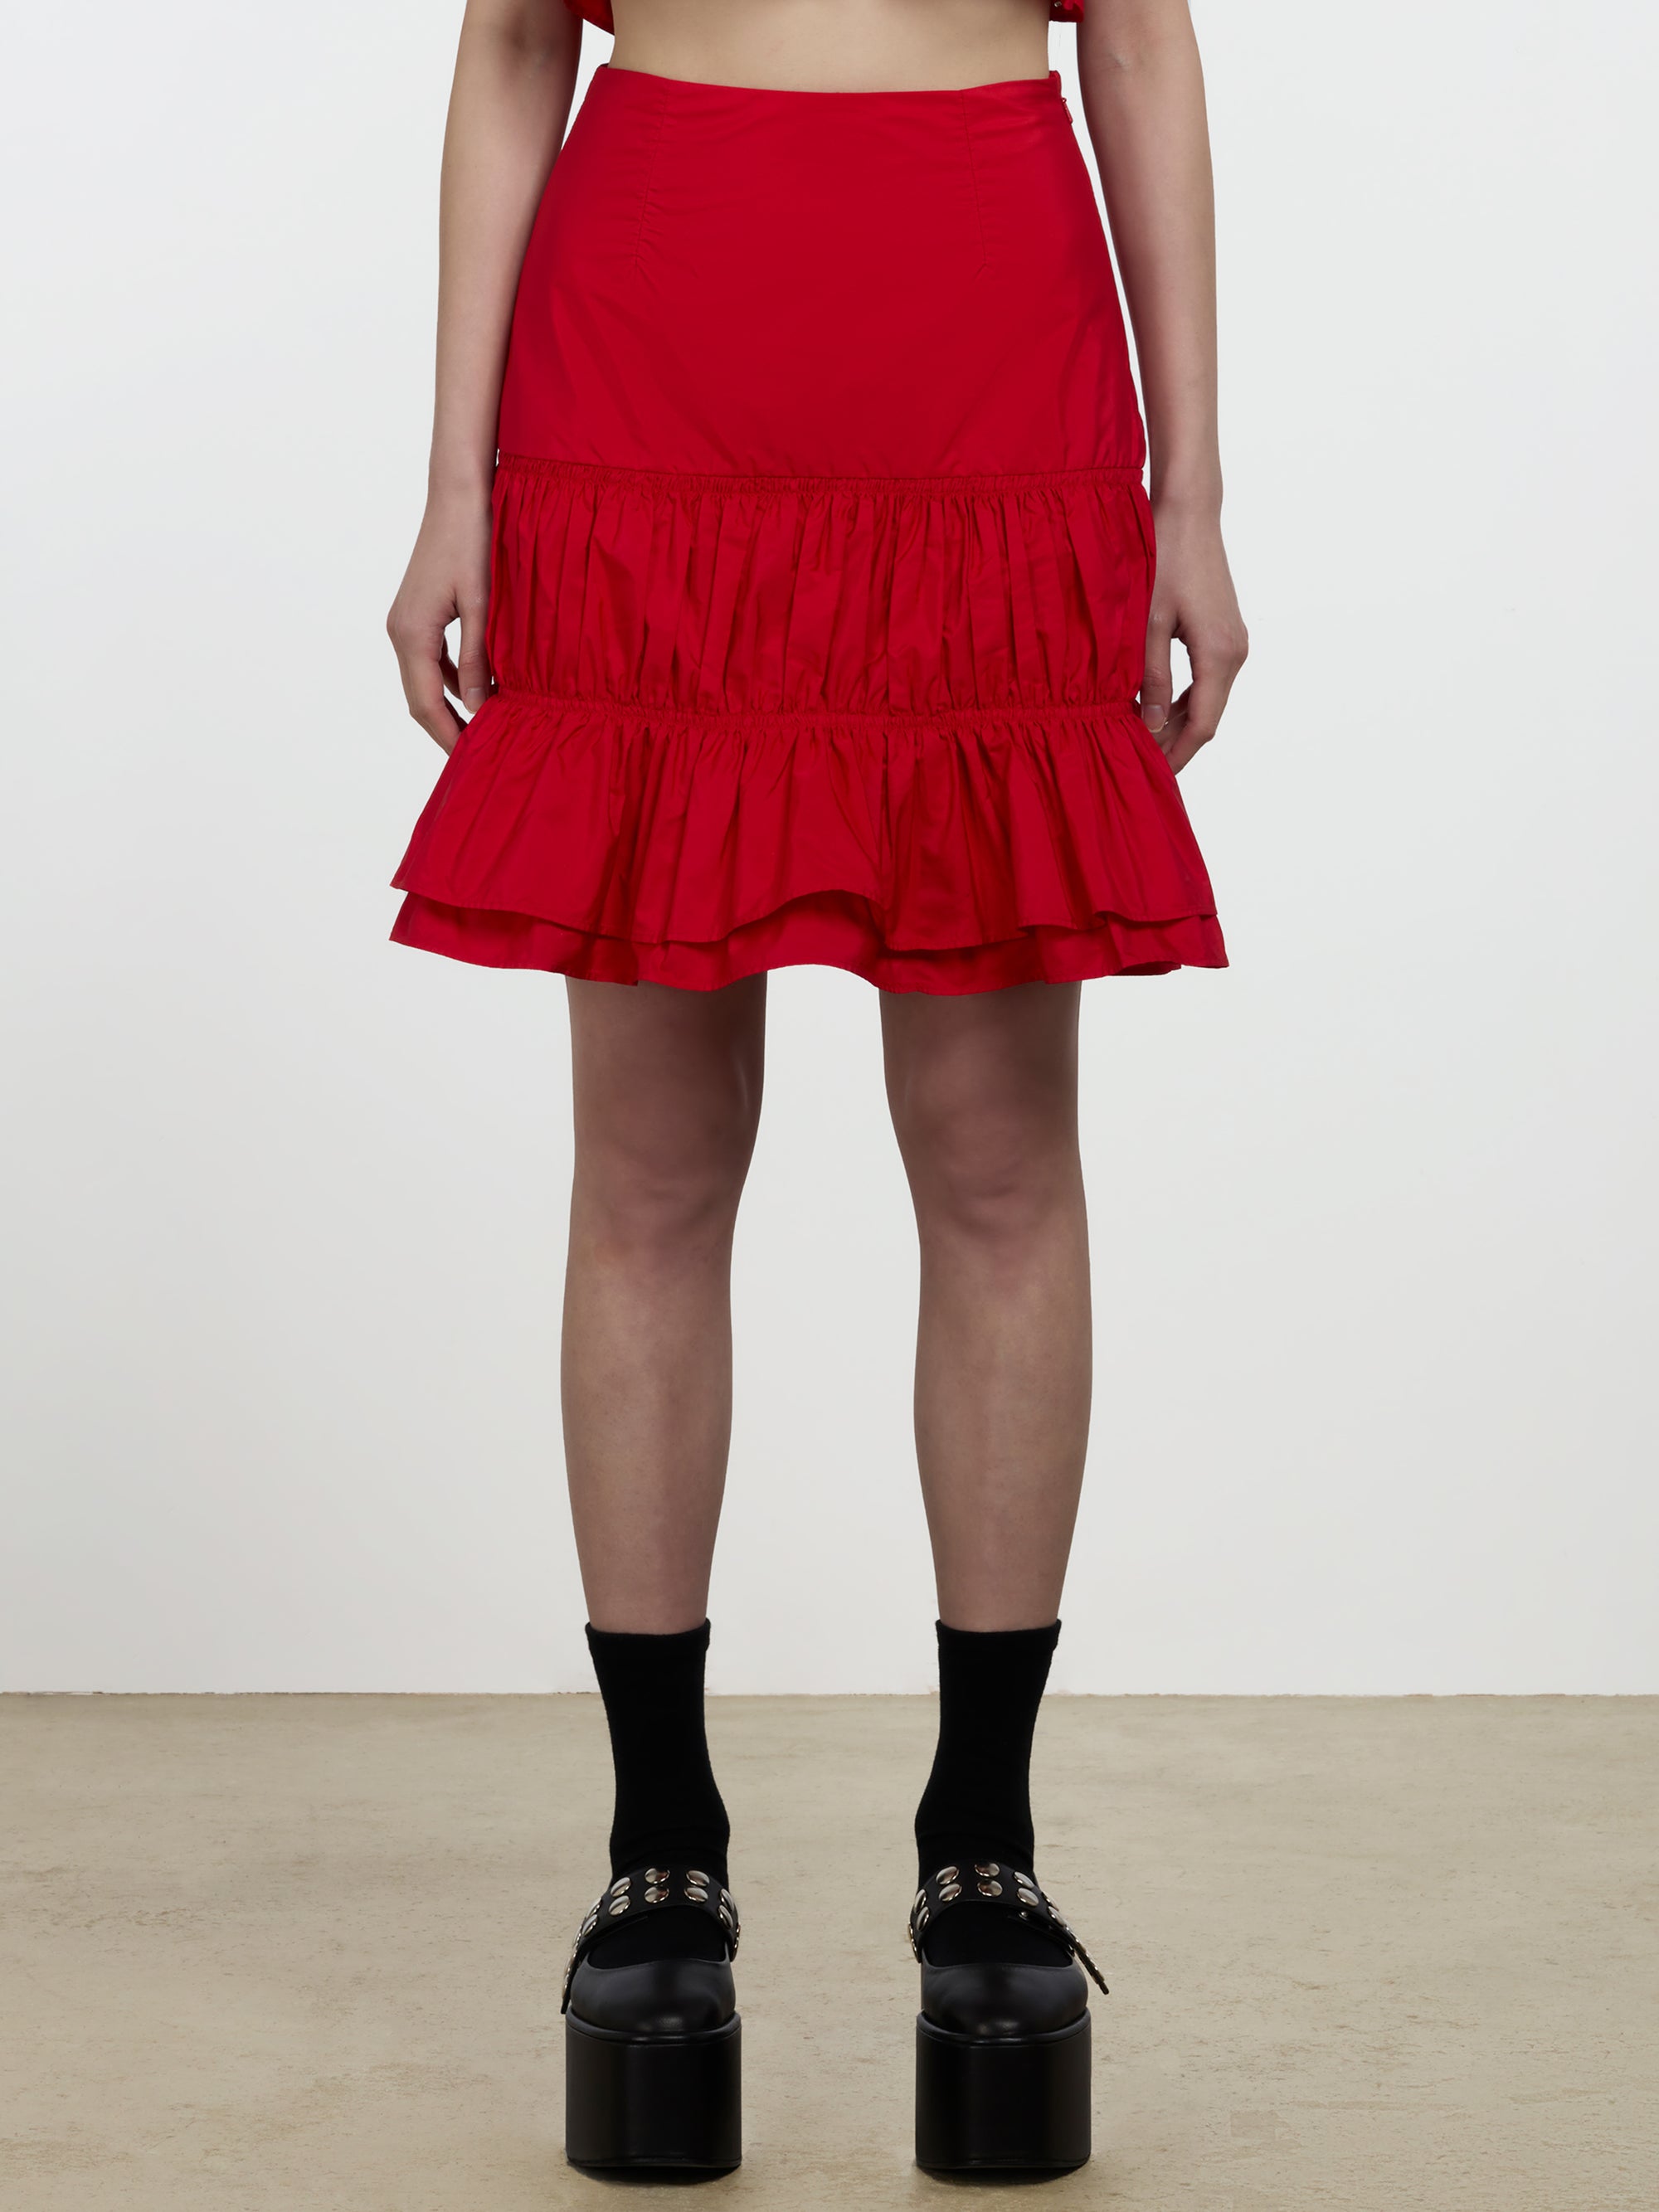 Molly Goddard - Carol Mini Skirt - (Red) view 1